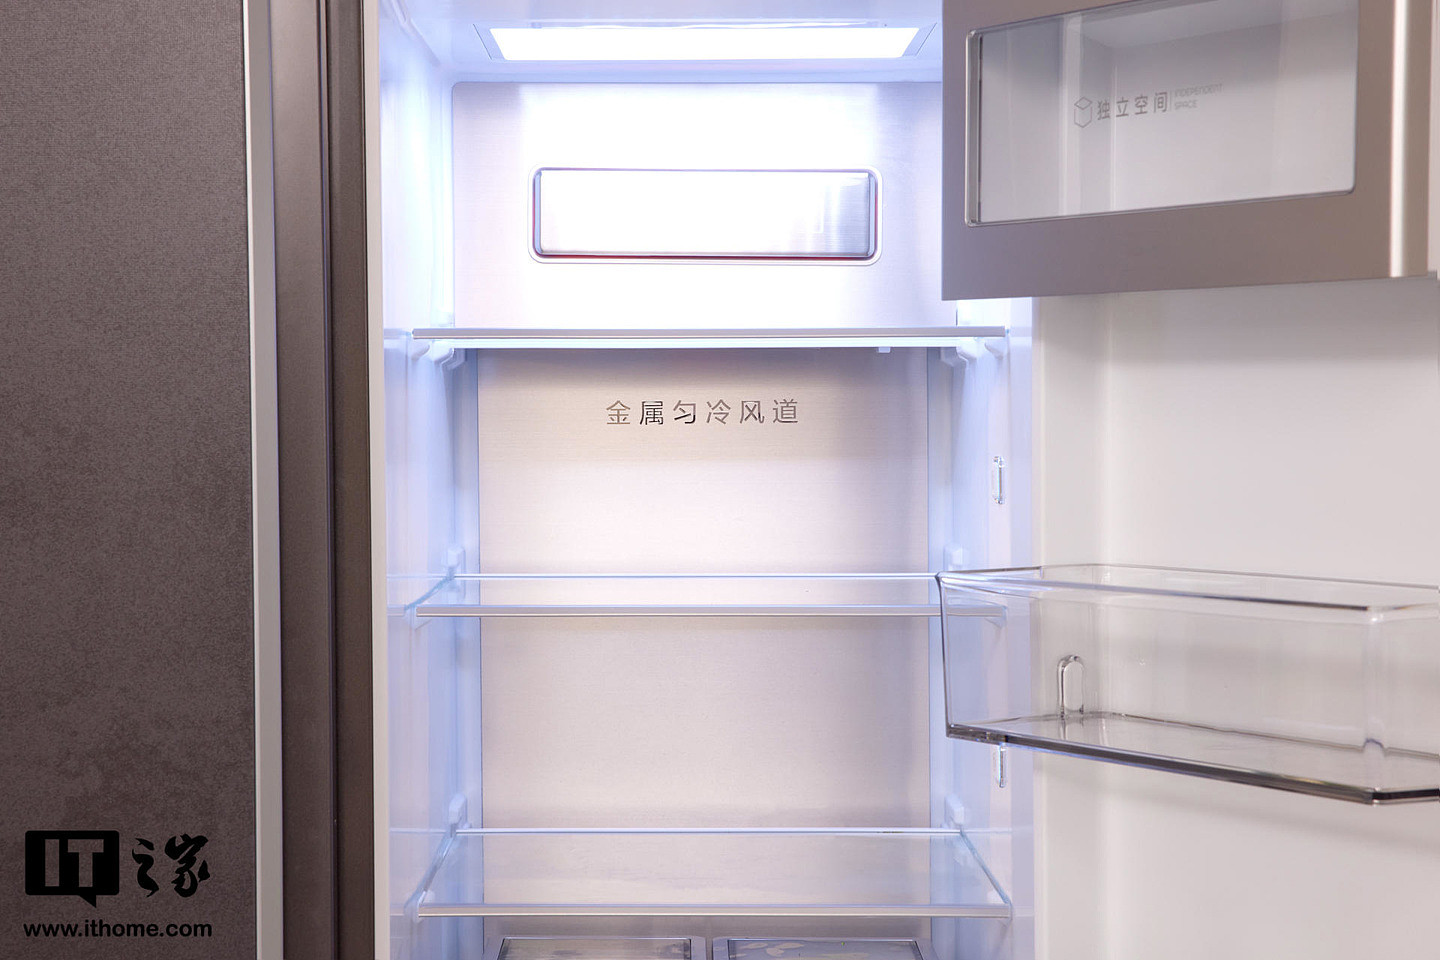 【IT之家评测室】TCL 格物冰箱 Q10 深度体验：能装，能冻，能灭，能鲜 - 11